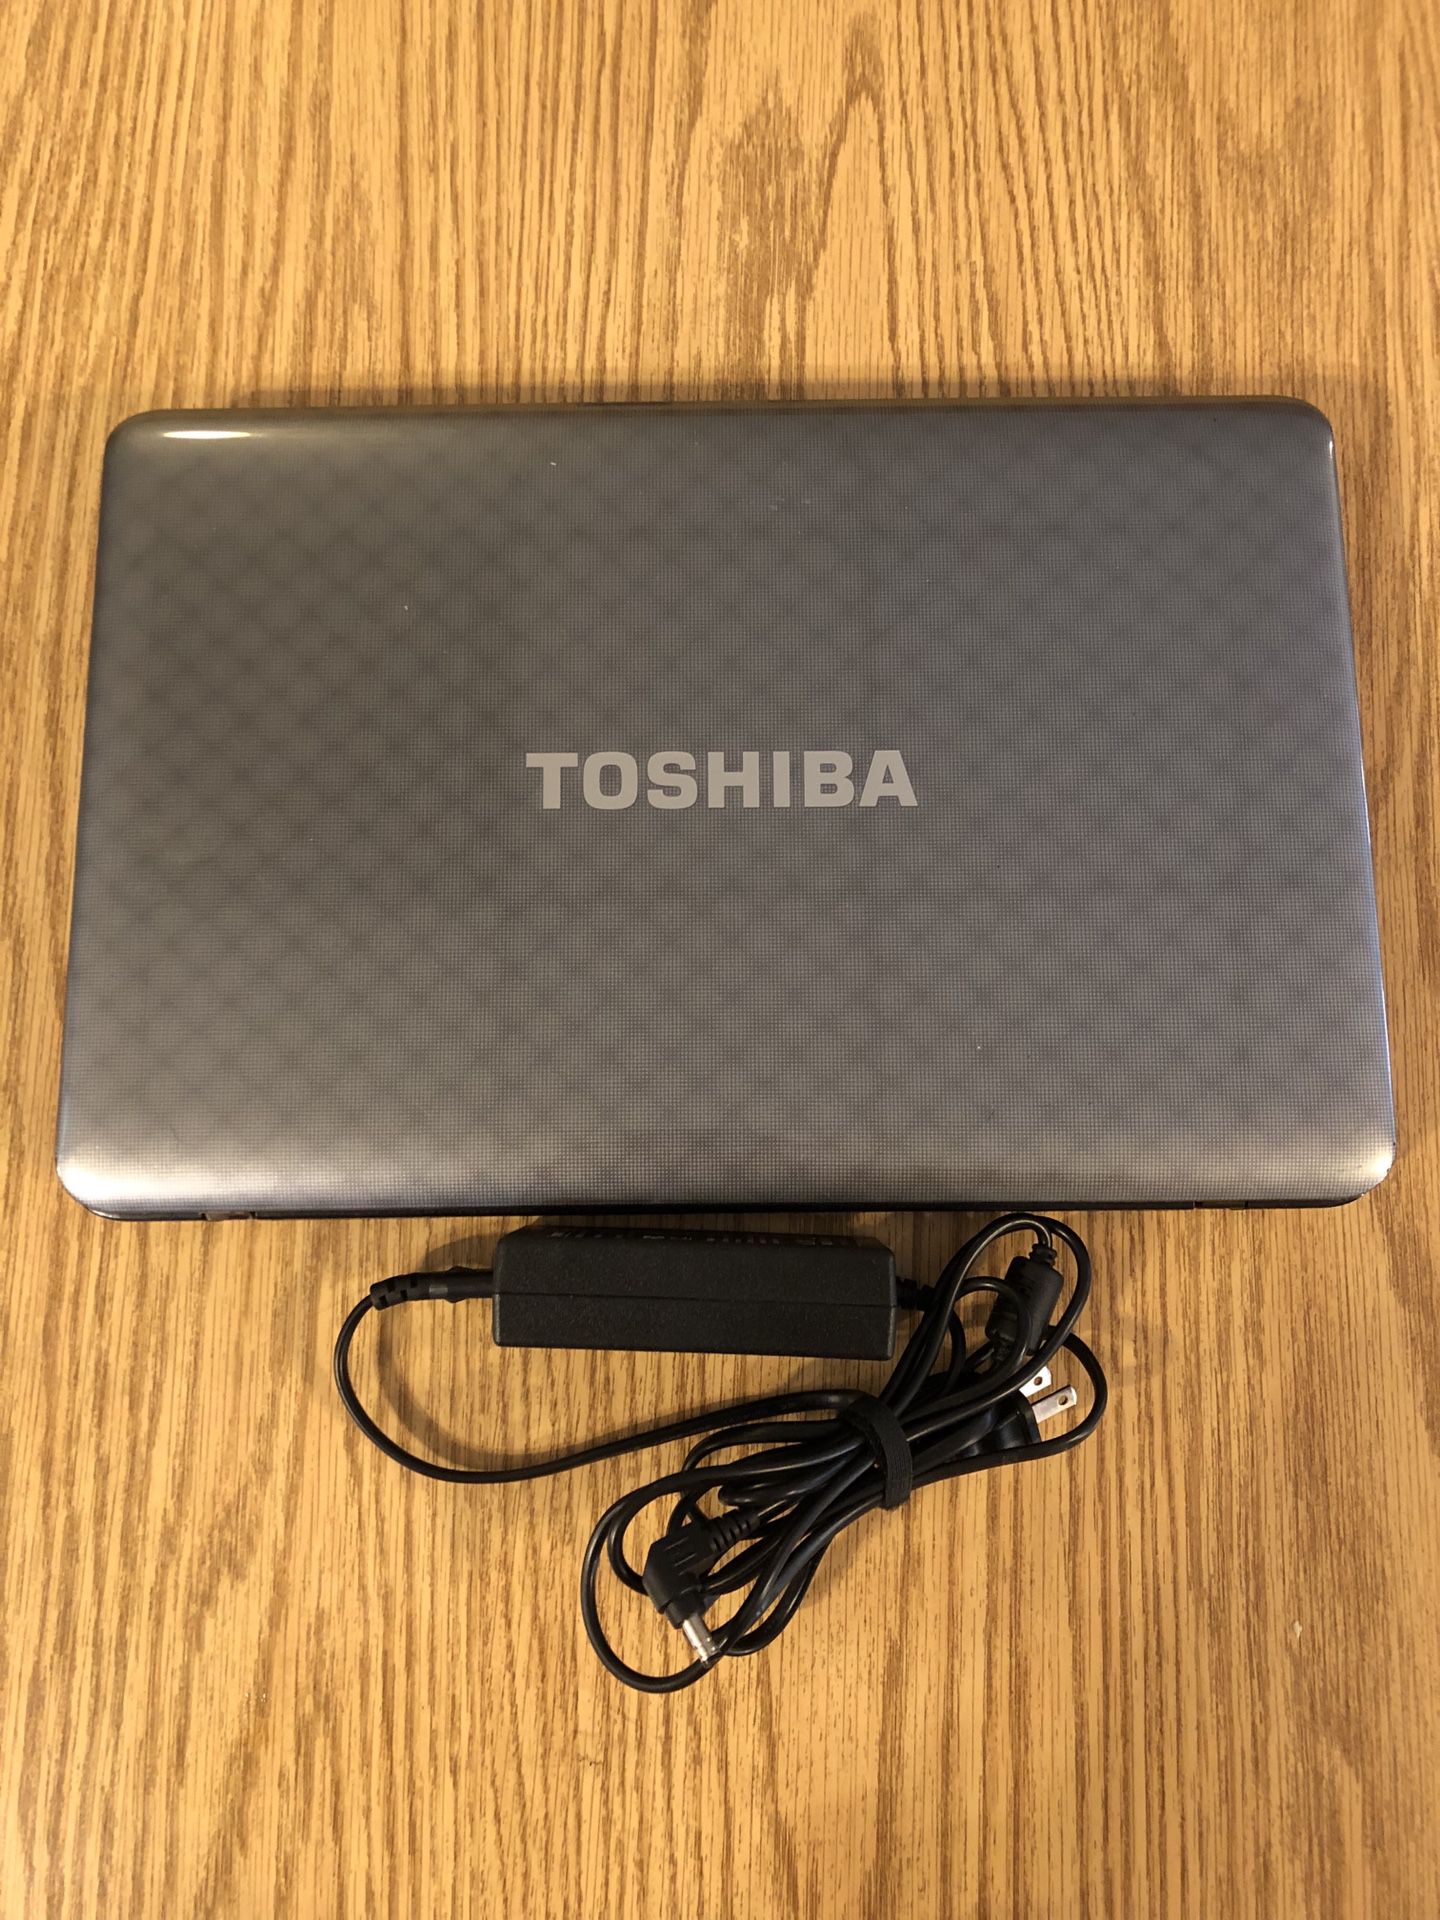 TOSHIBA Satellite L755 Laptop (for part or repair) read